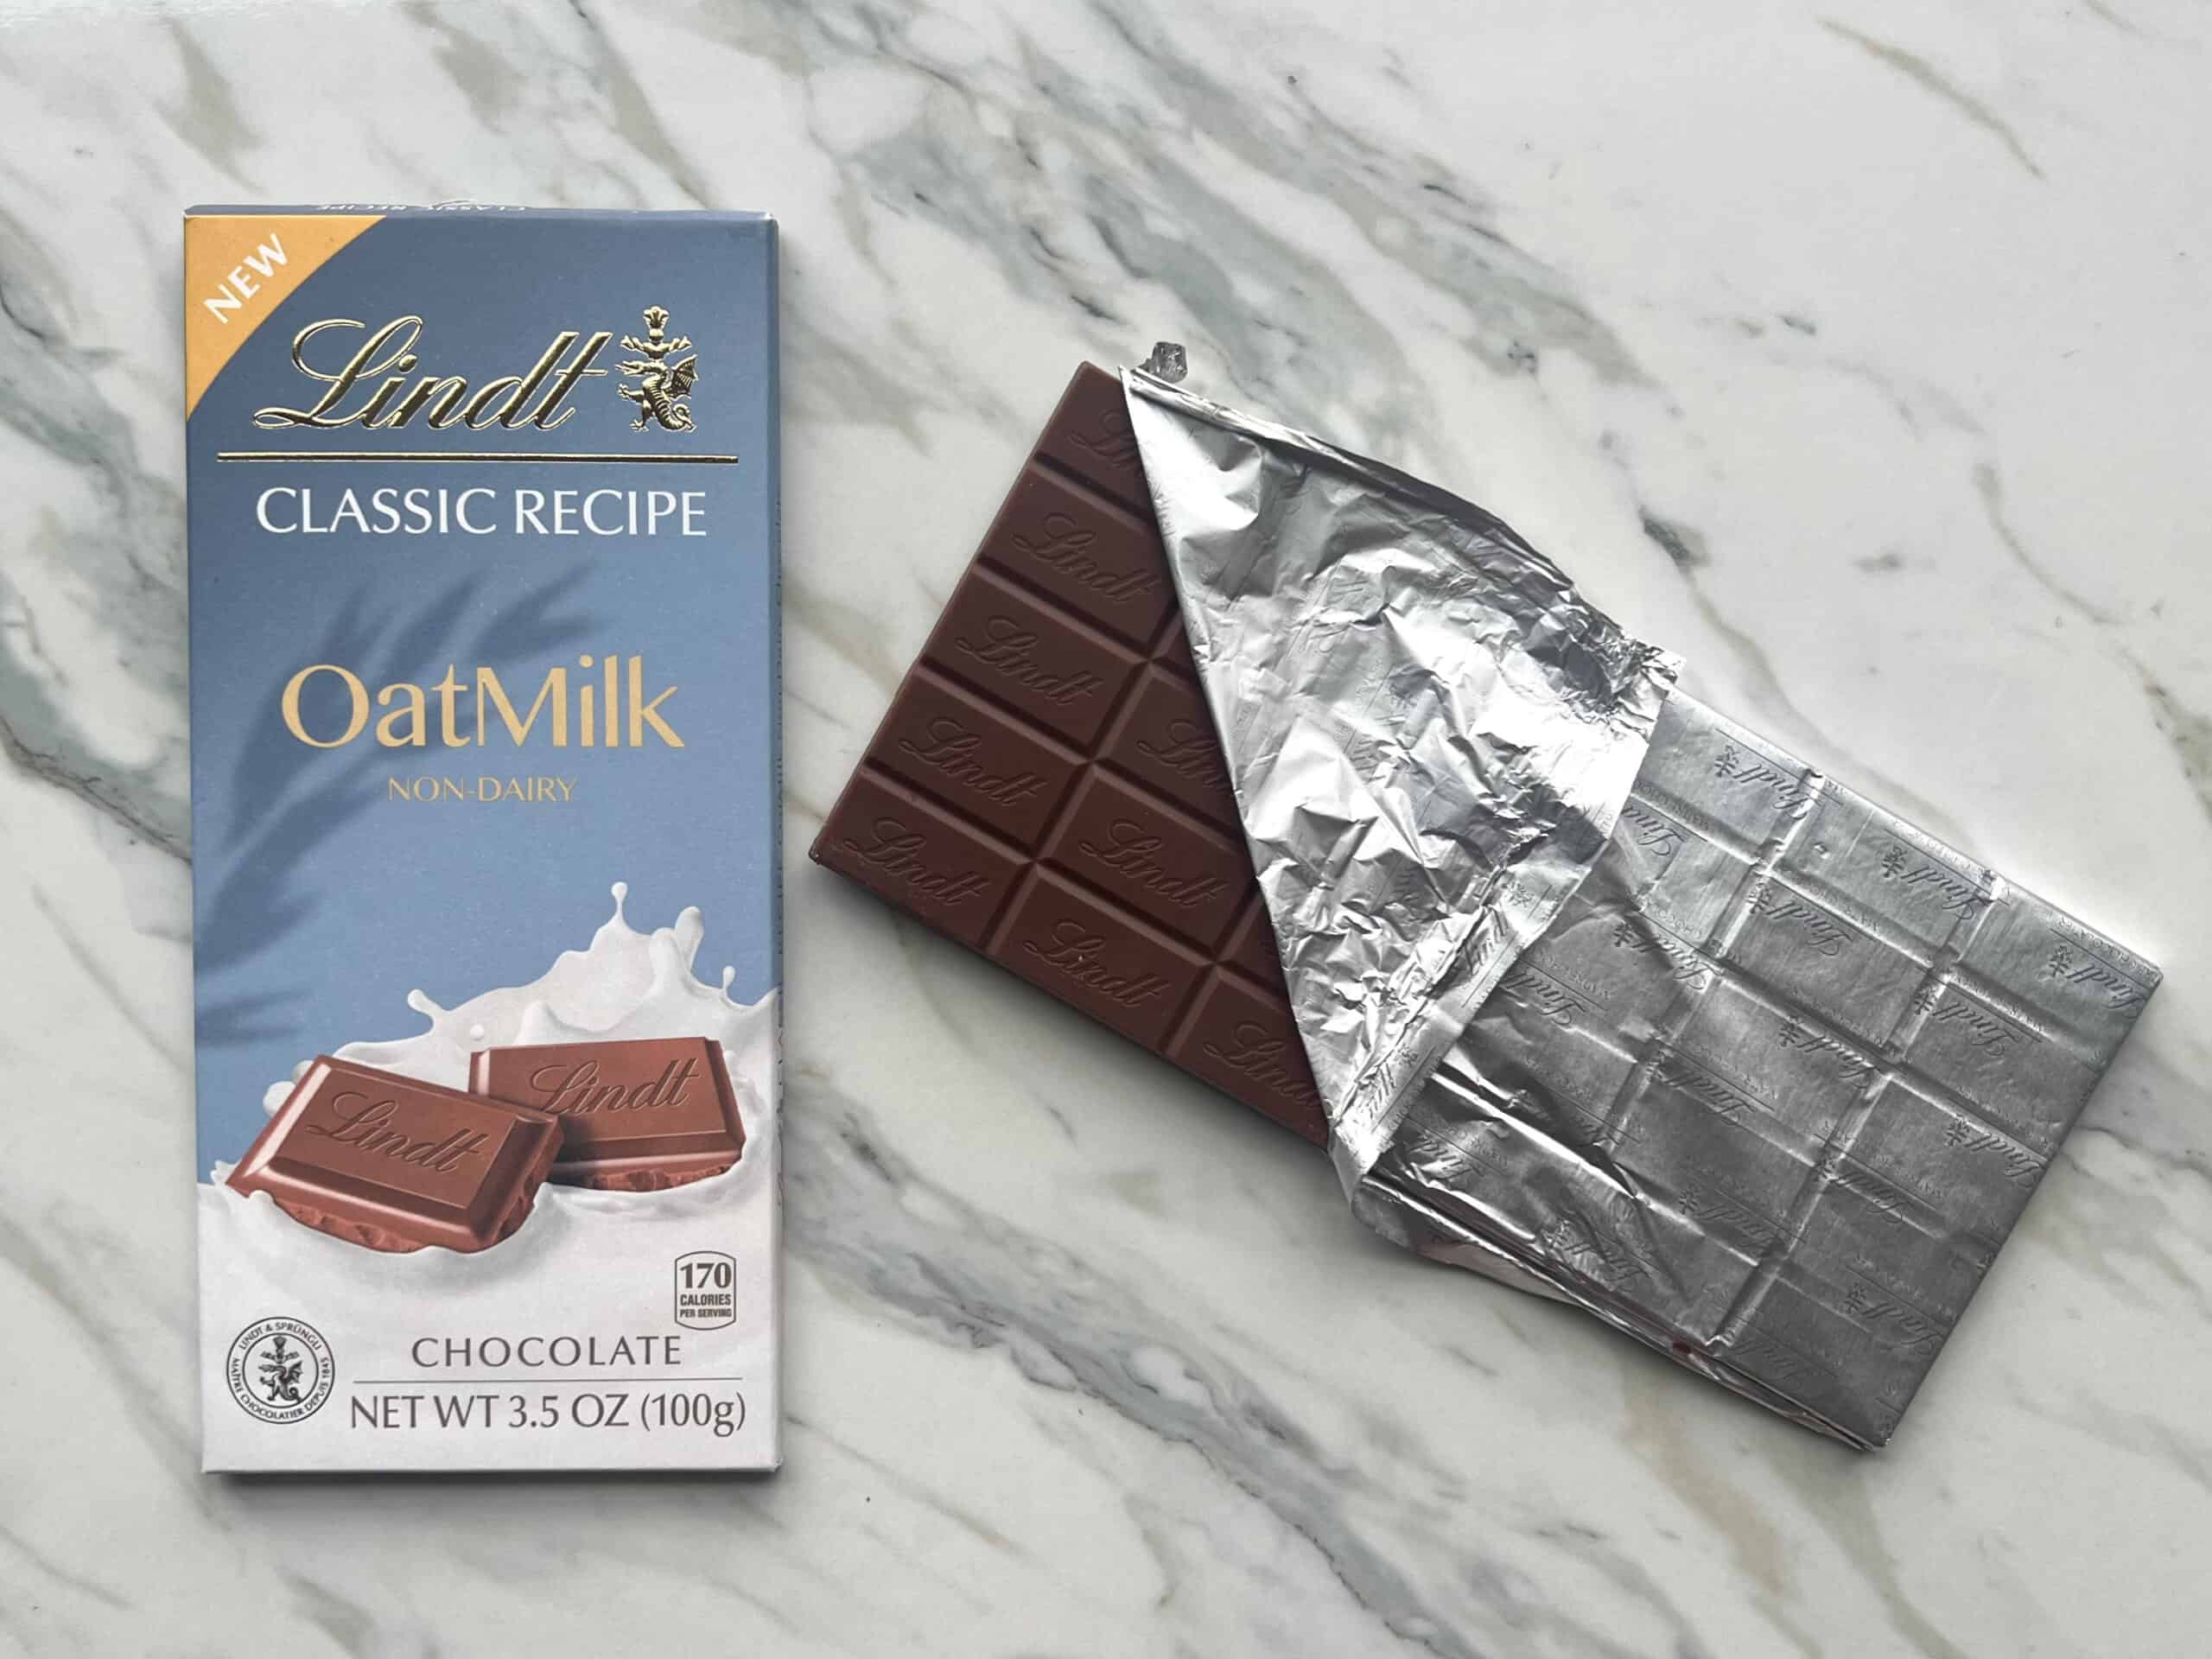 Non-Dairy Oatmilk Salted Caramel Chocolate CLASSIC RECIPE Bar (3.5 oz)